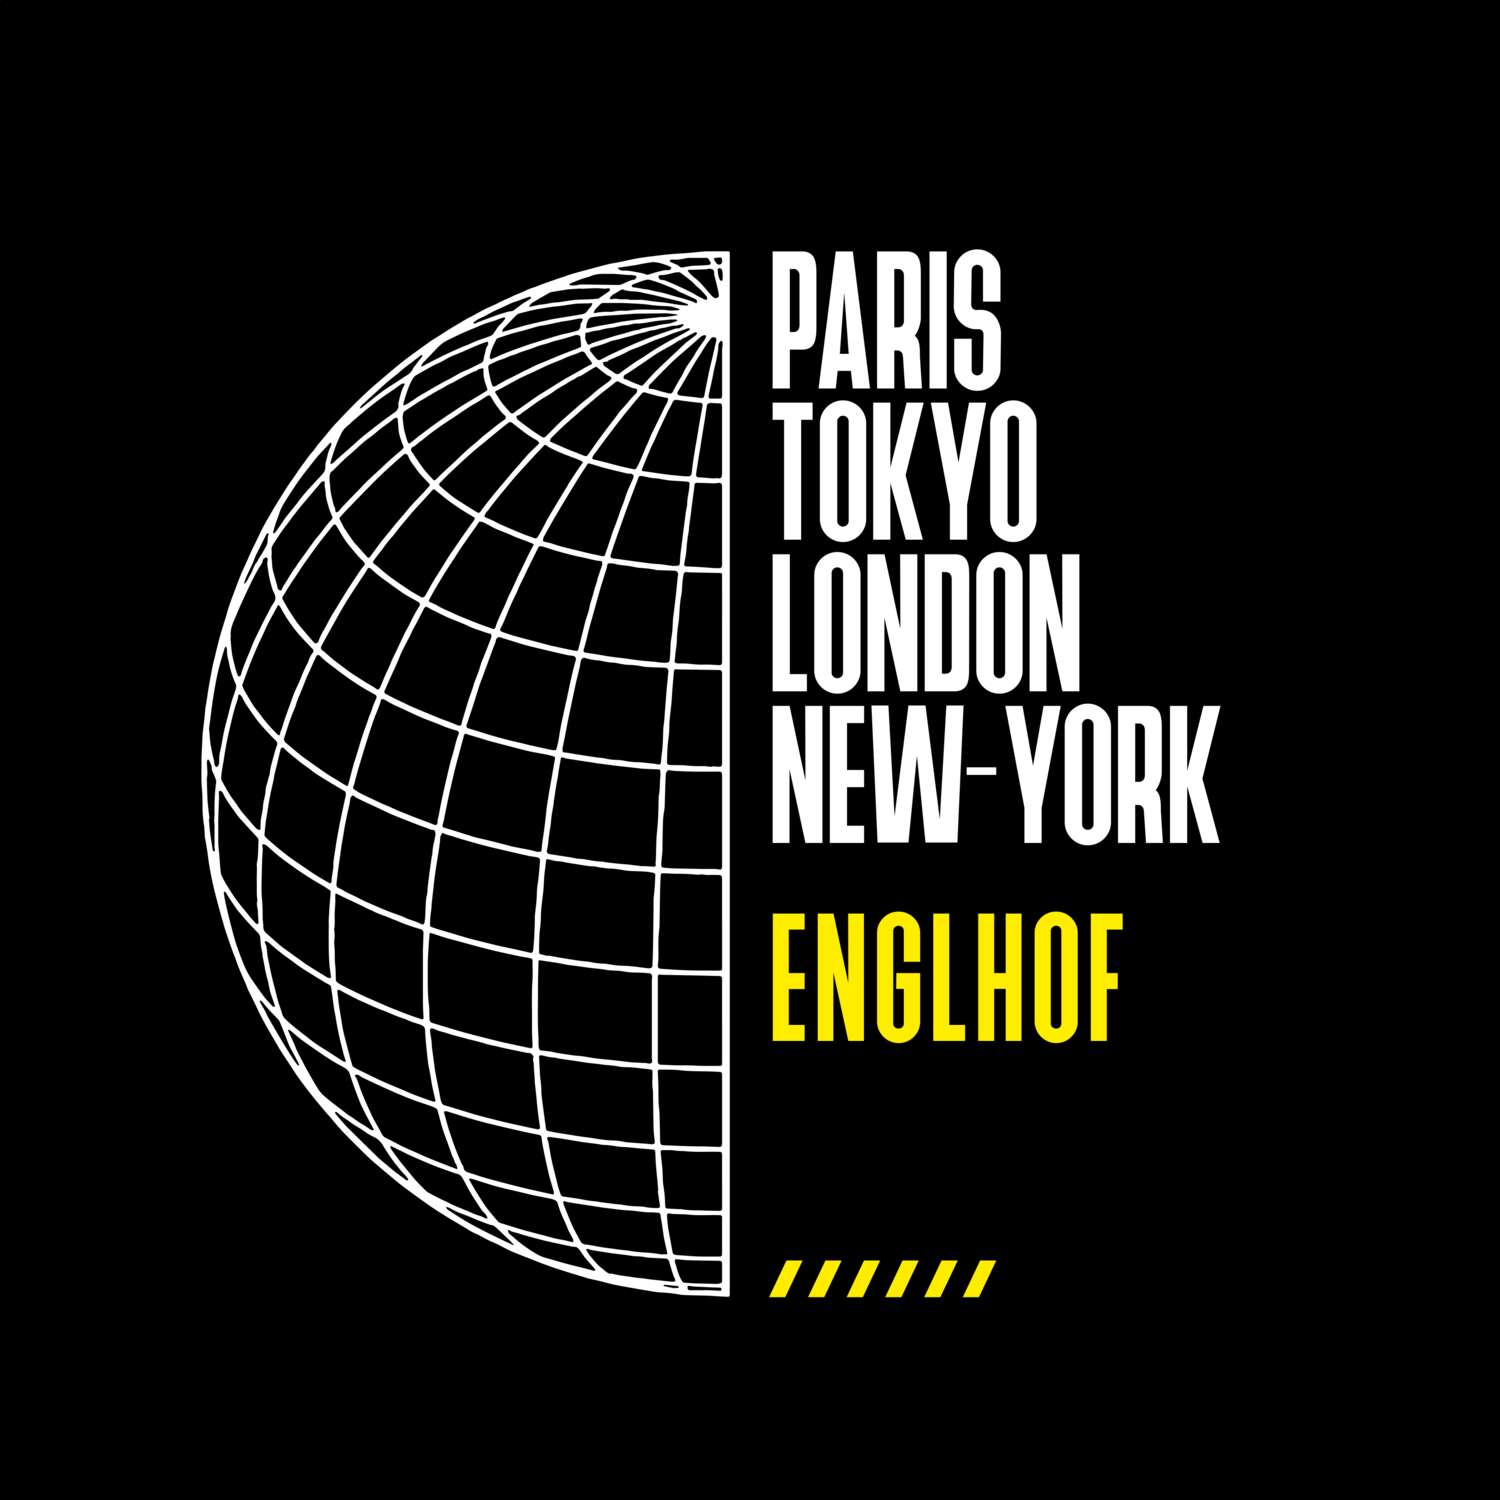 Englhof T-Shirt »Paris Tokyo London«